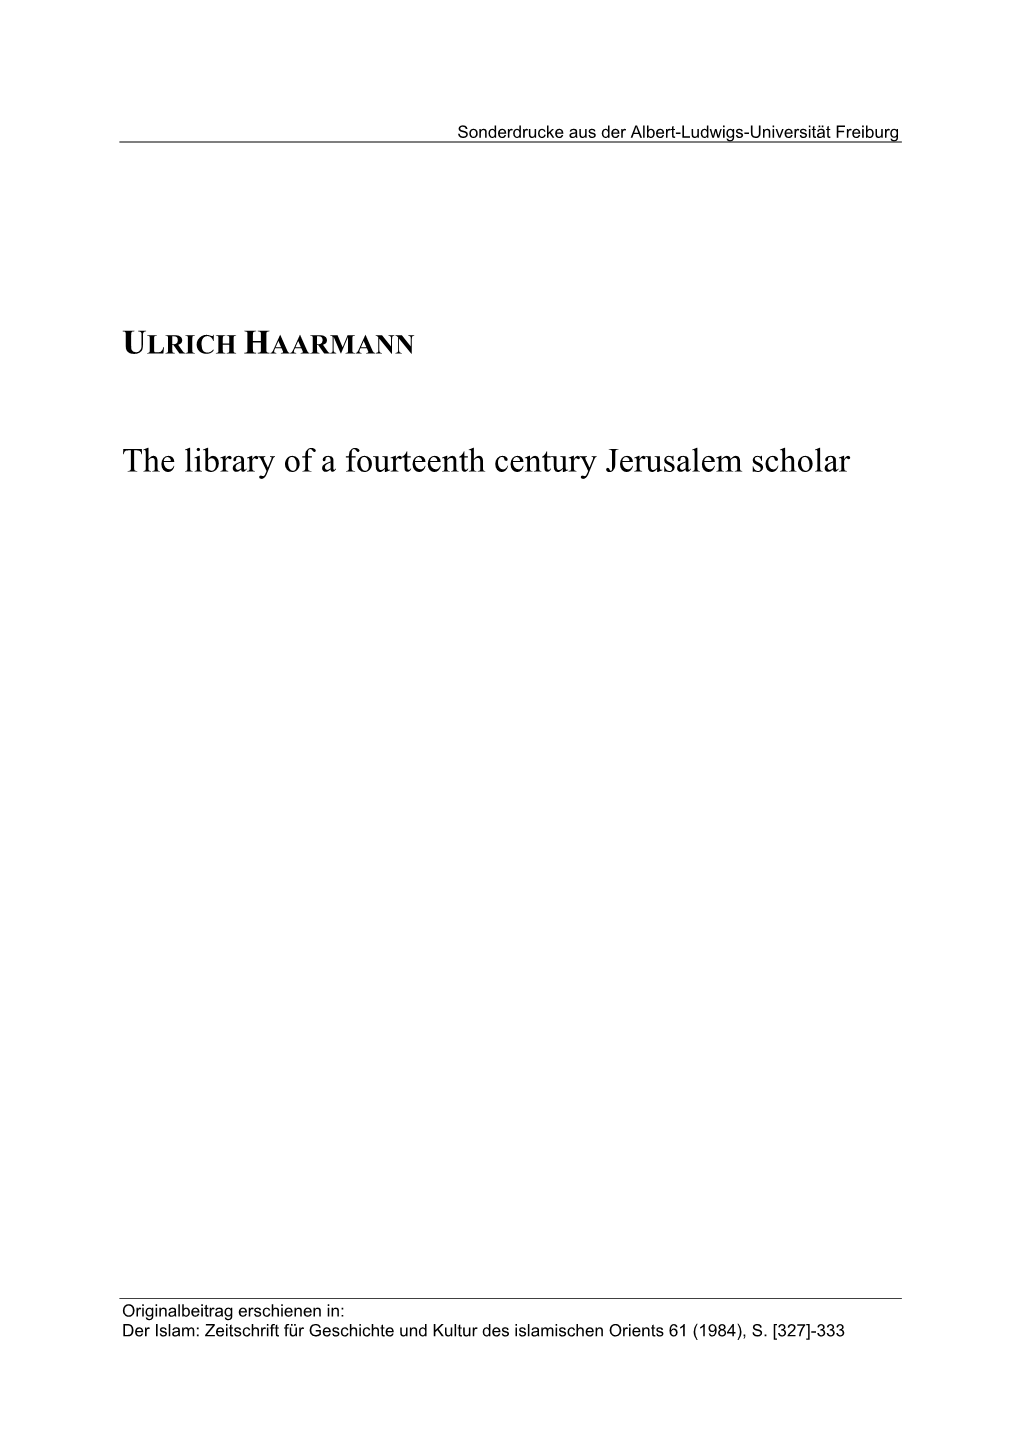 The Library of a Fourteenth Century Jerusalem Scholar